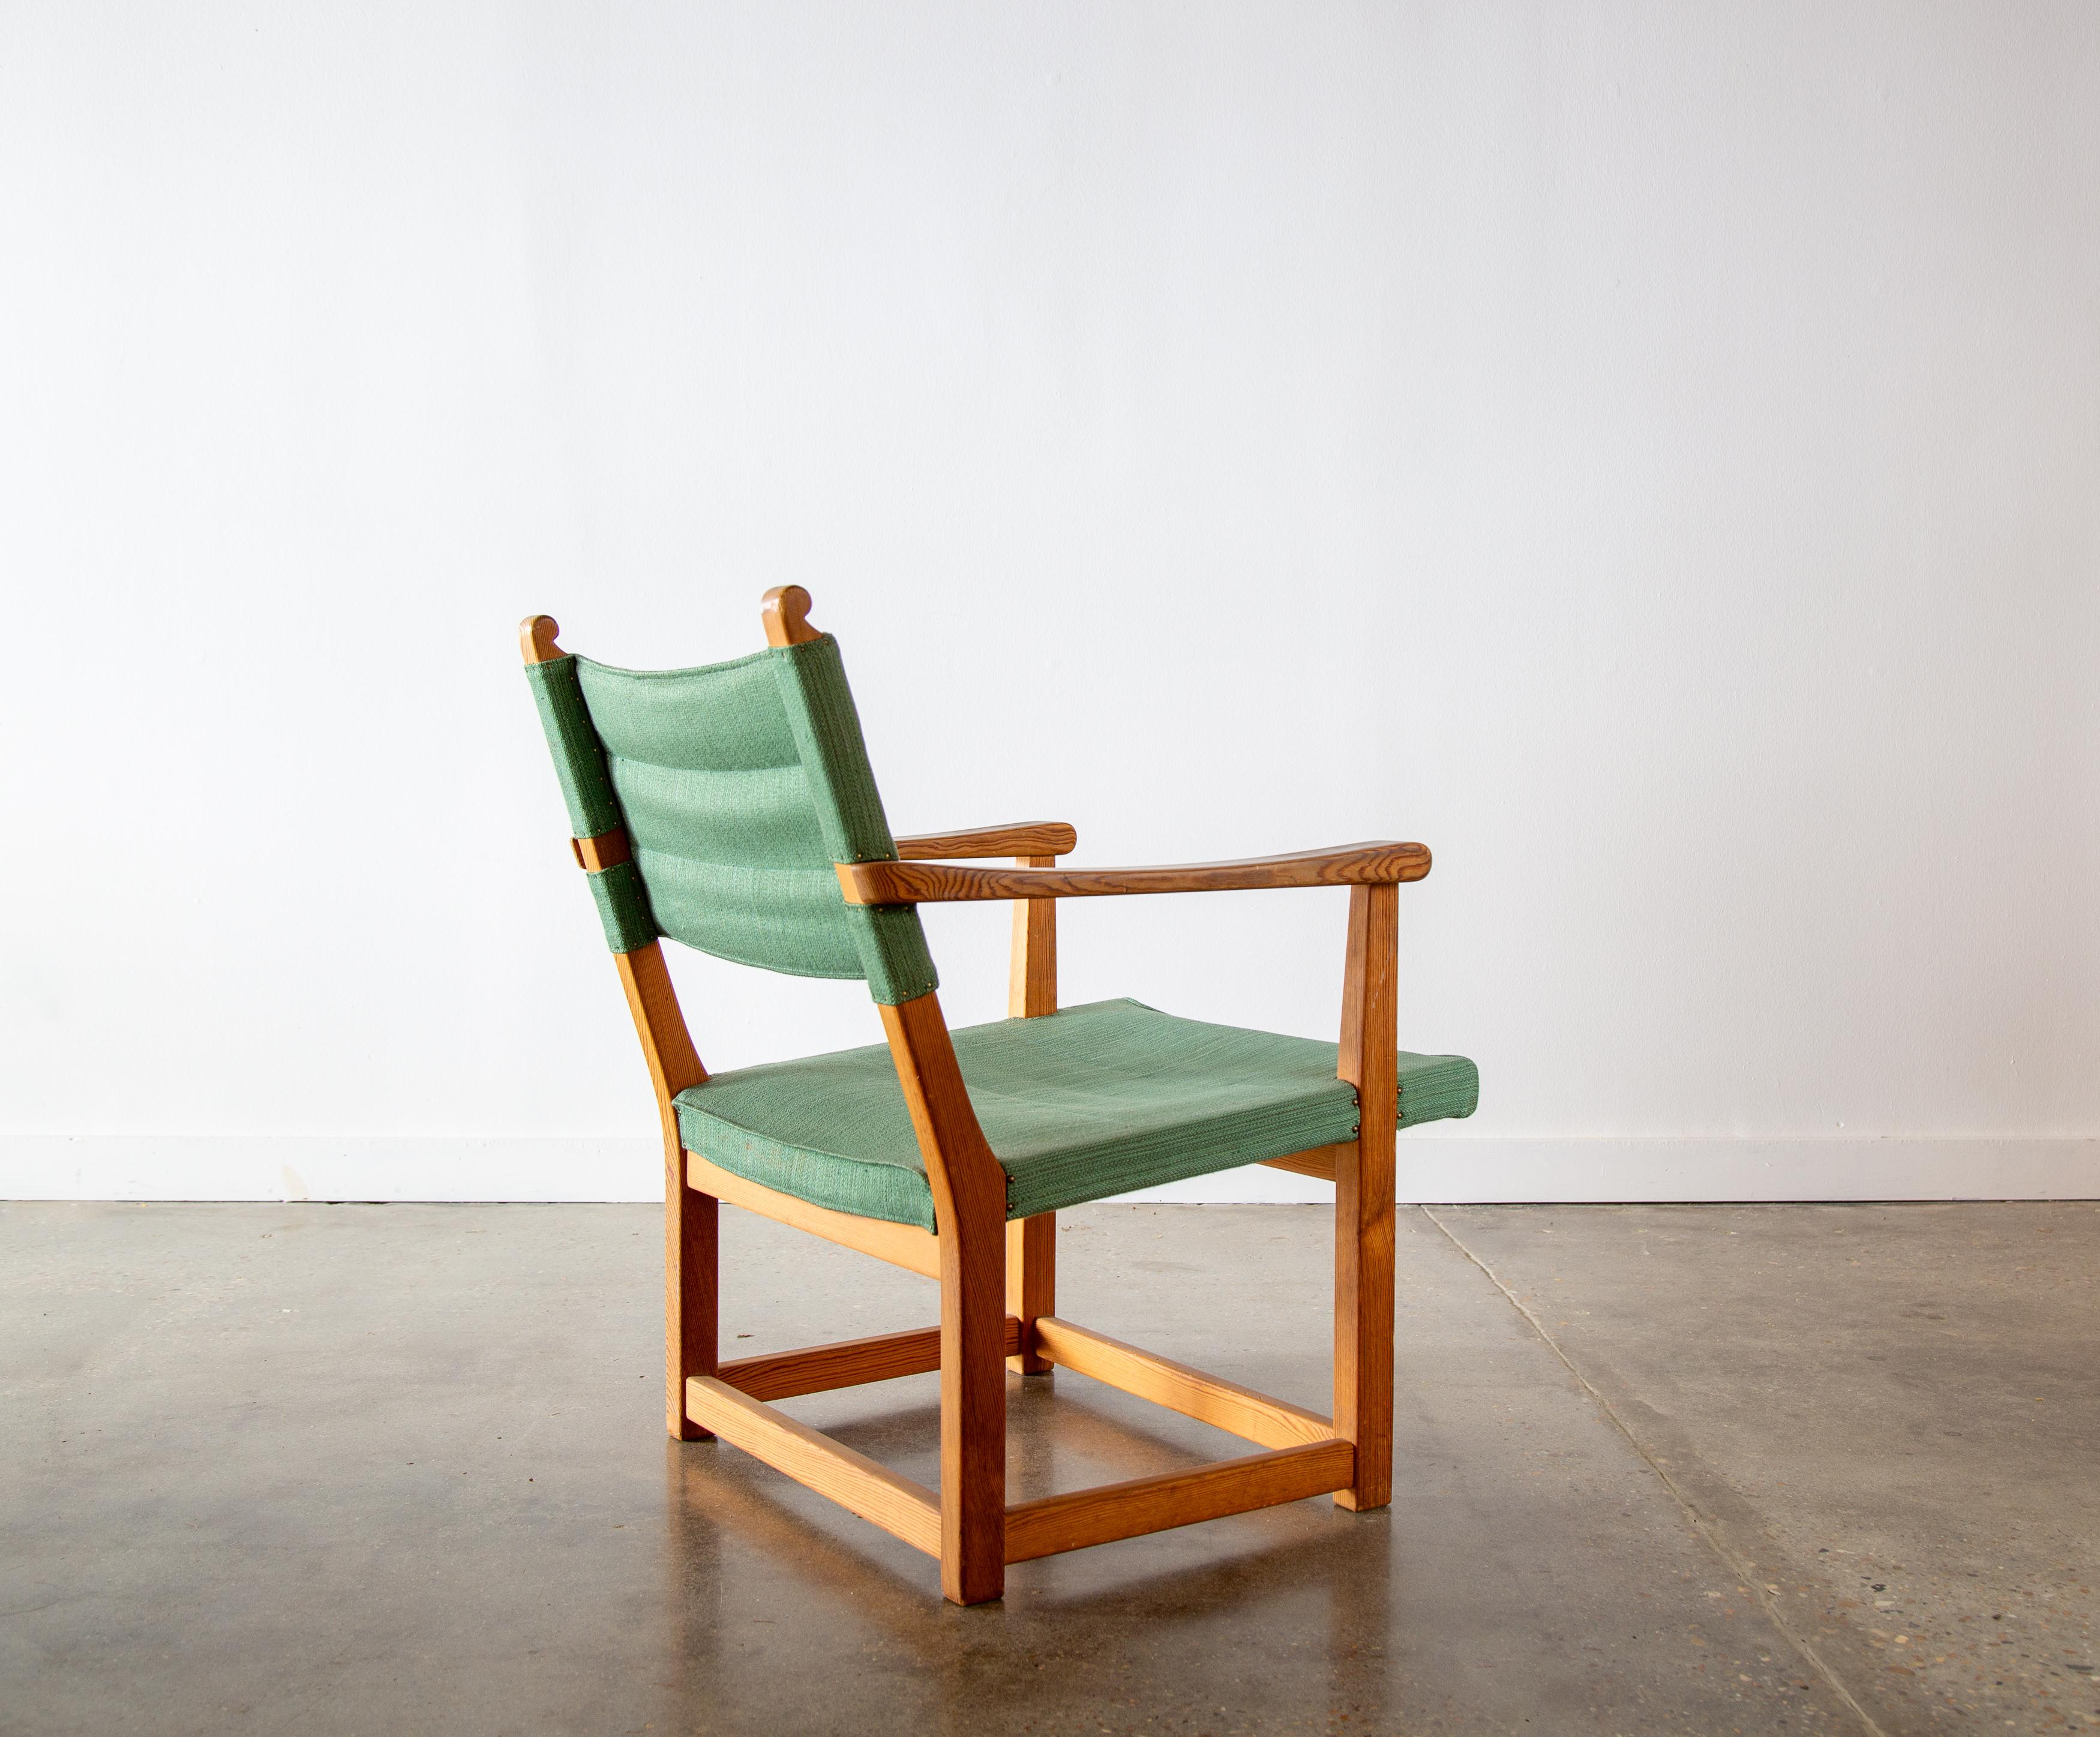 Carl Malmsten Hangsits Sessel aus massivem Kiefernholz und grünem Stoff ca. 1947 (Moderne der Mitte des Jahrhunderts) im Angebot